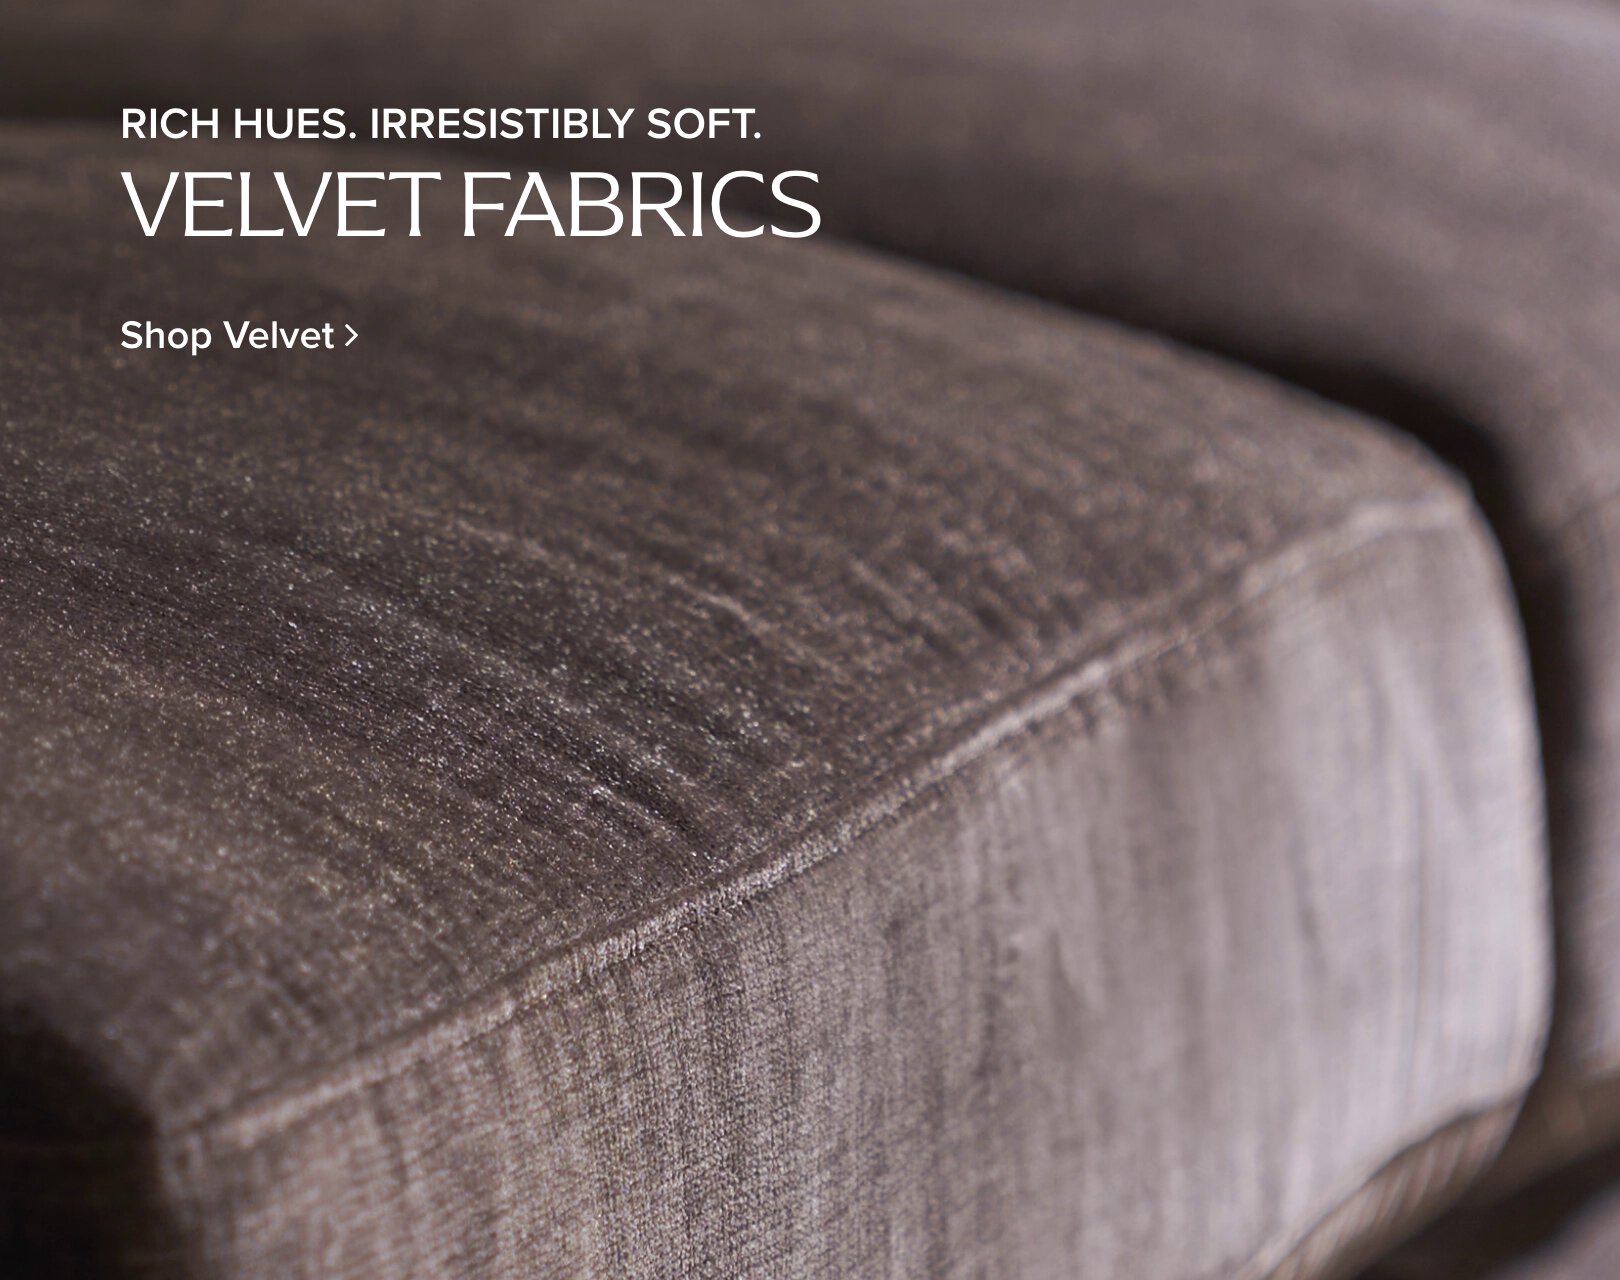 rich hues irresistibly soft velvet fabrics